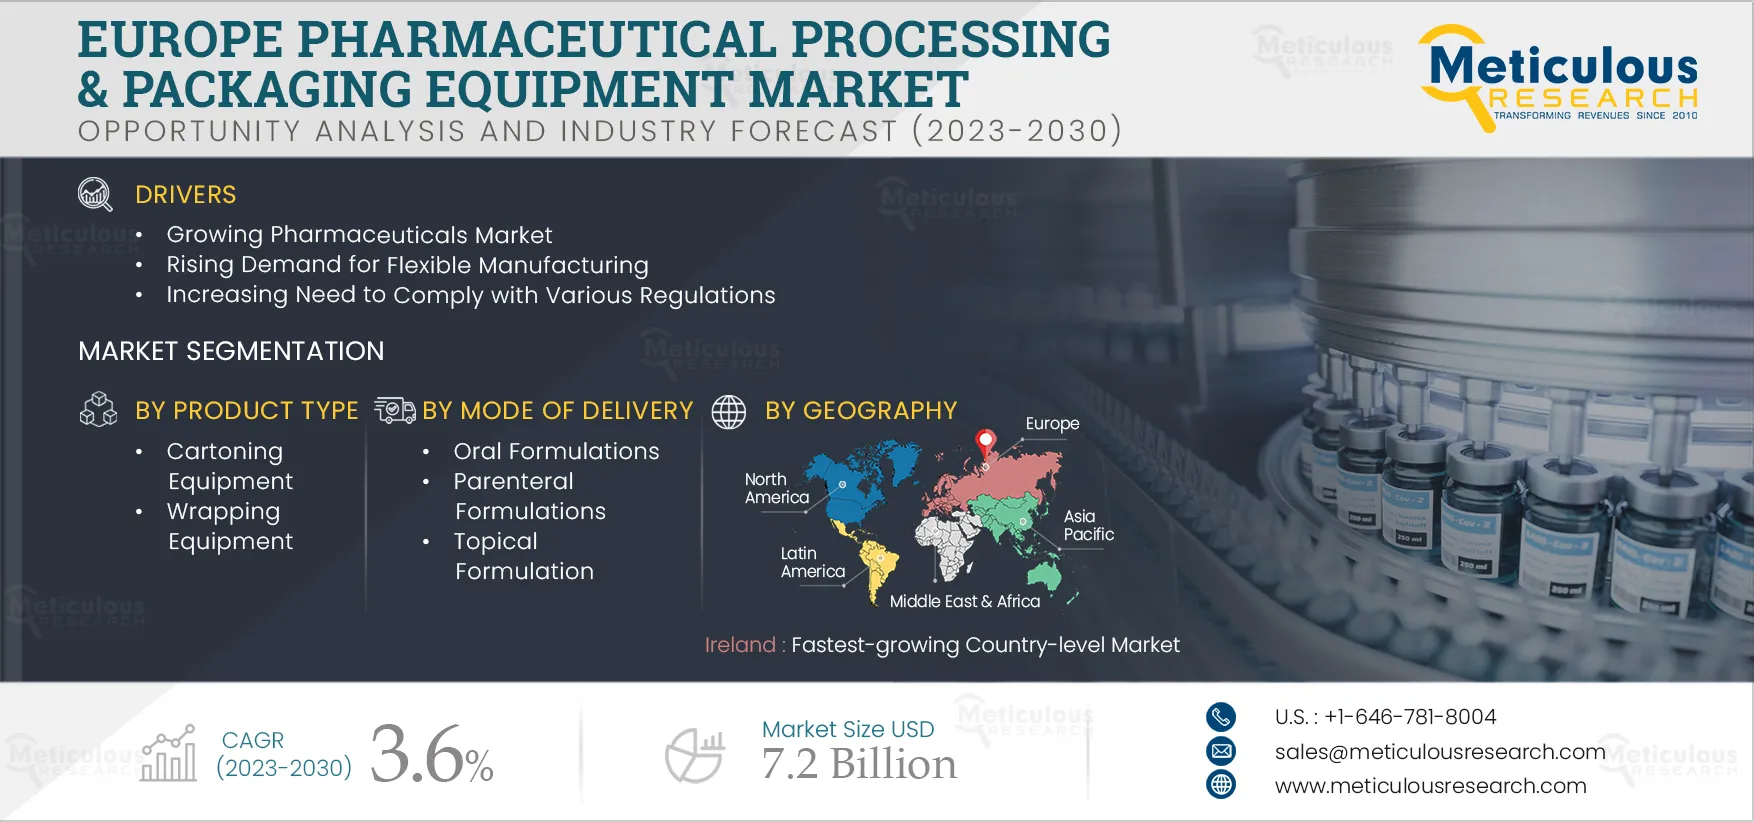 Europe Pharmaceutical Processing & Packaging Equipment Market